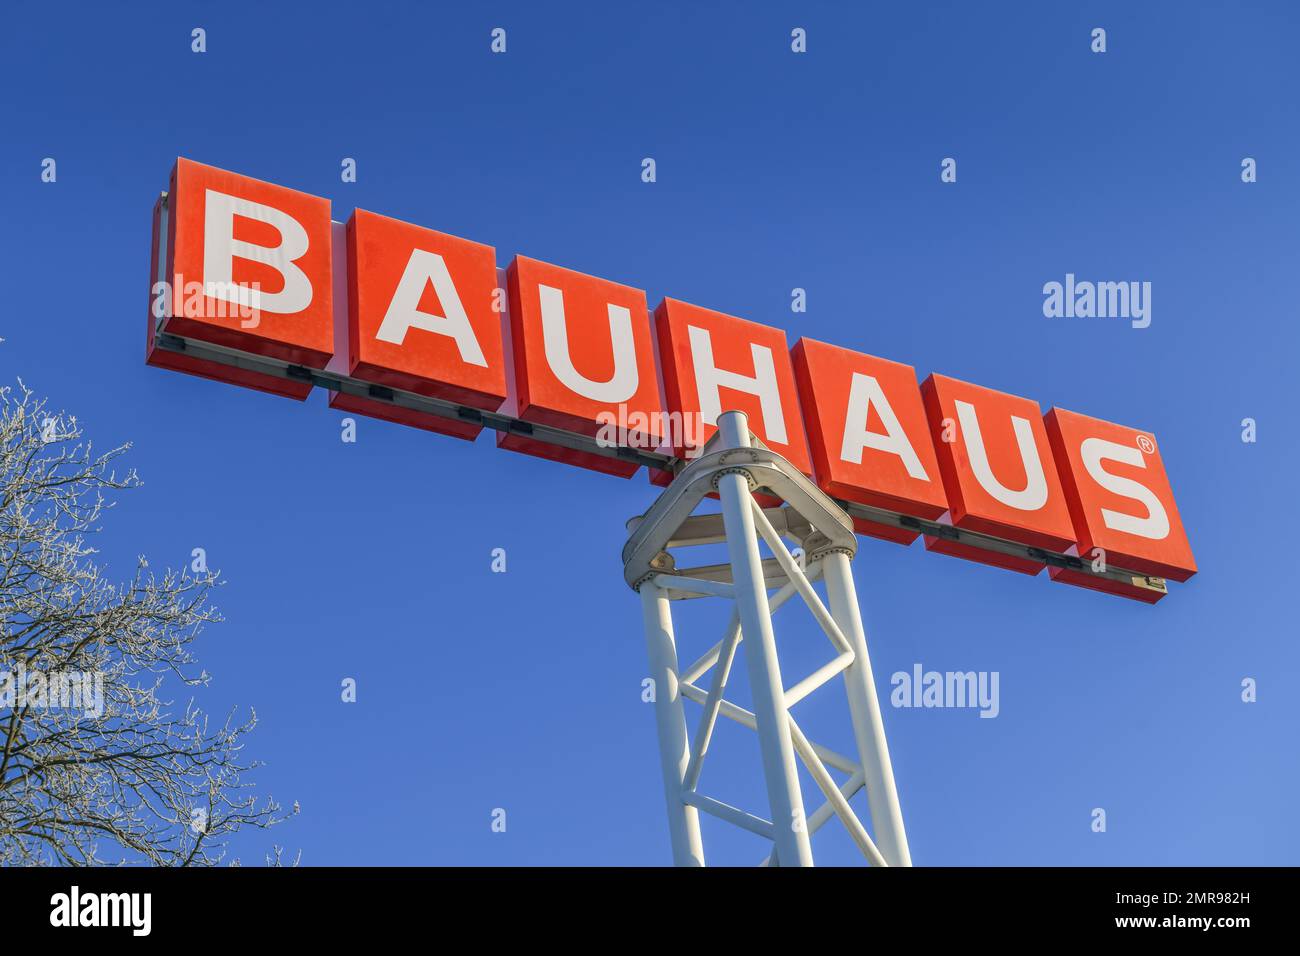 Bauhaus, Sachsendamm, Schöneberg, Berlin, Germany, Europe Stock Photo